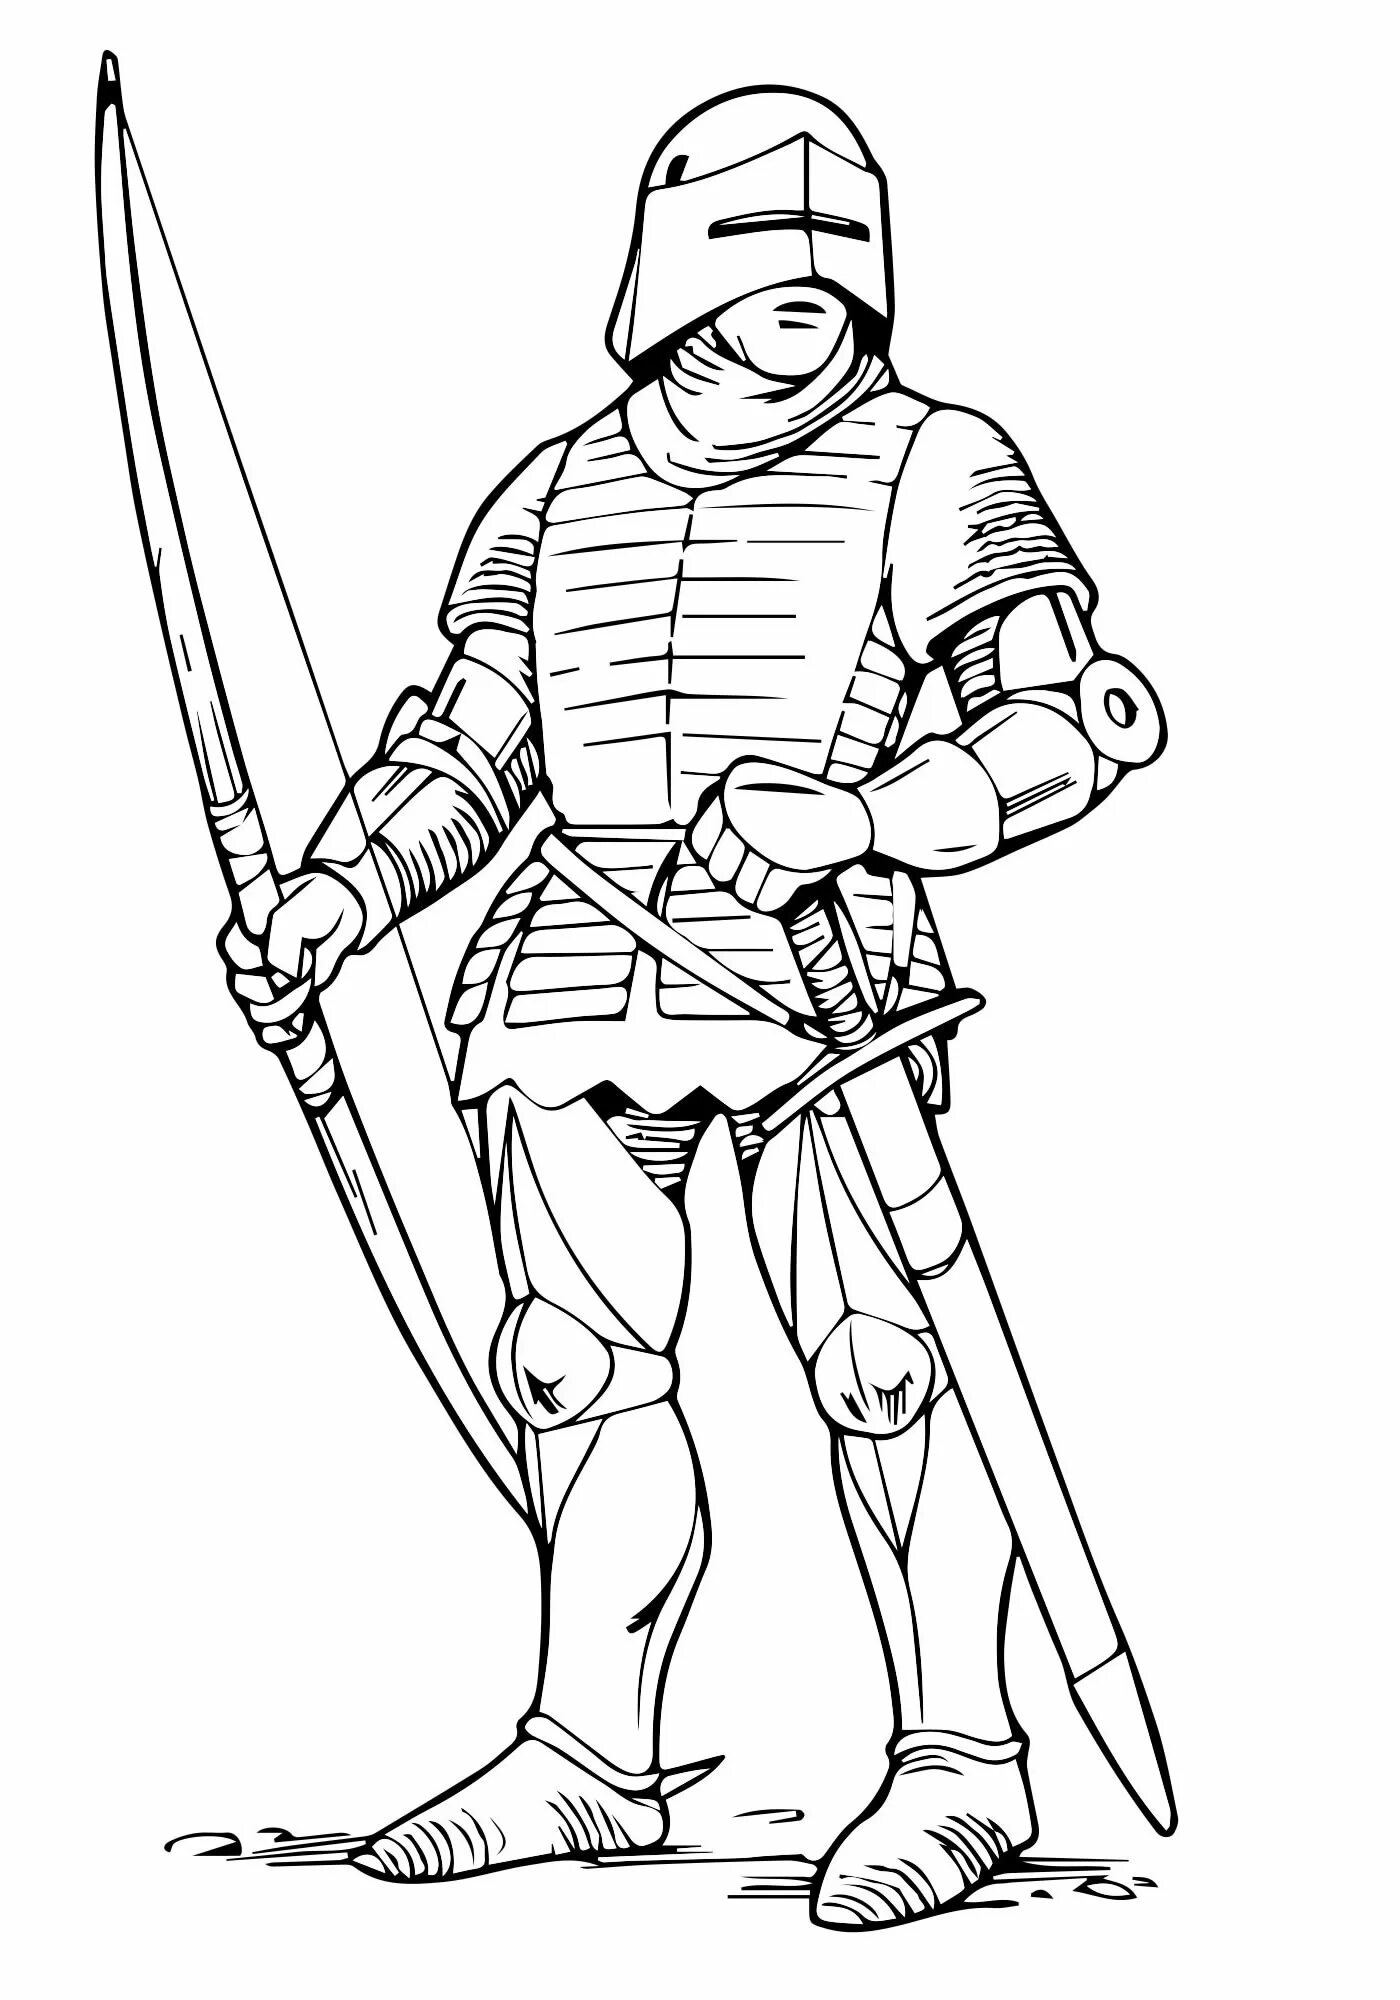 Knight in armor #7